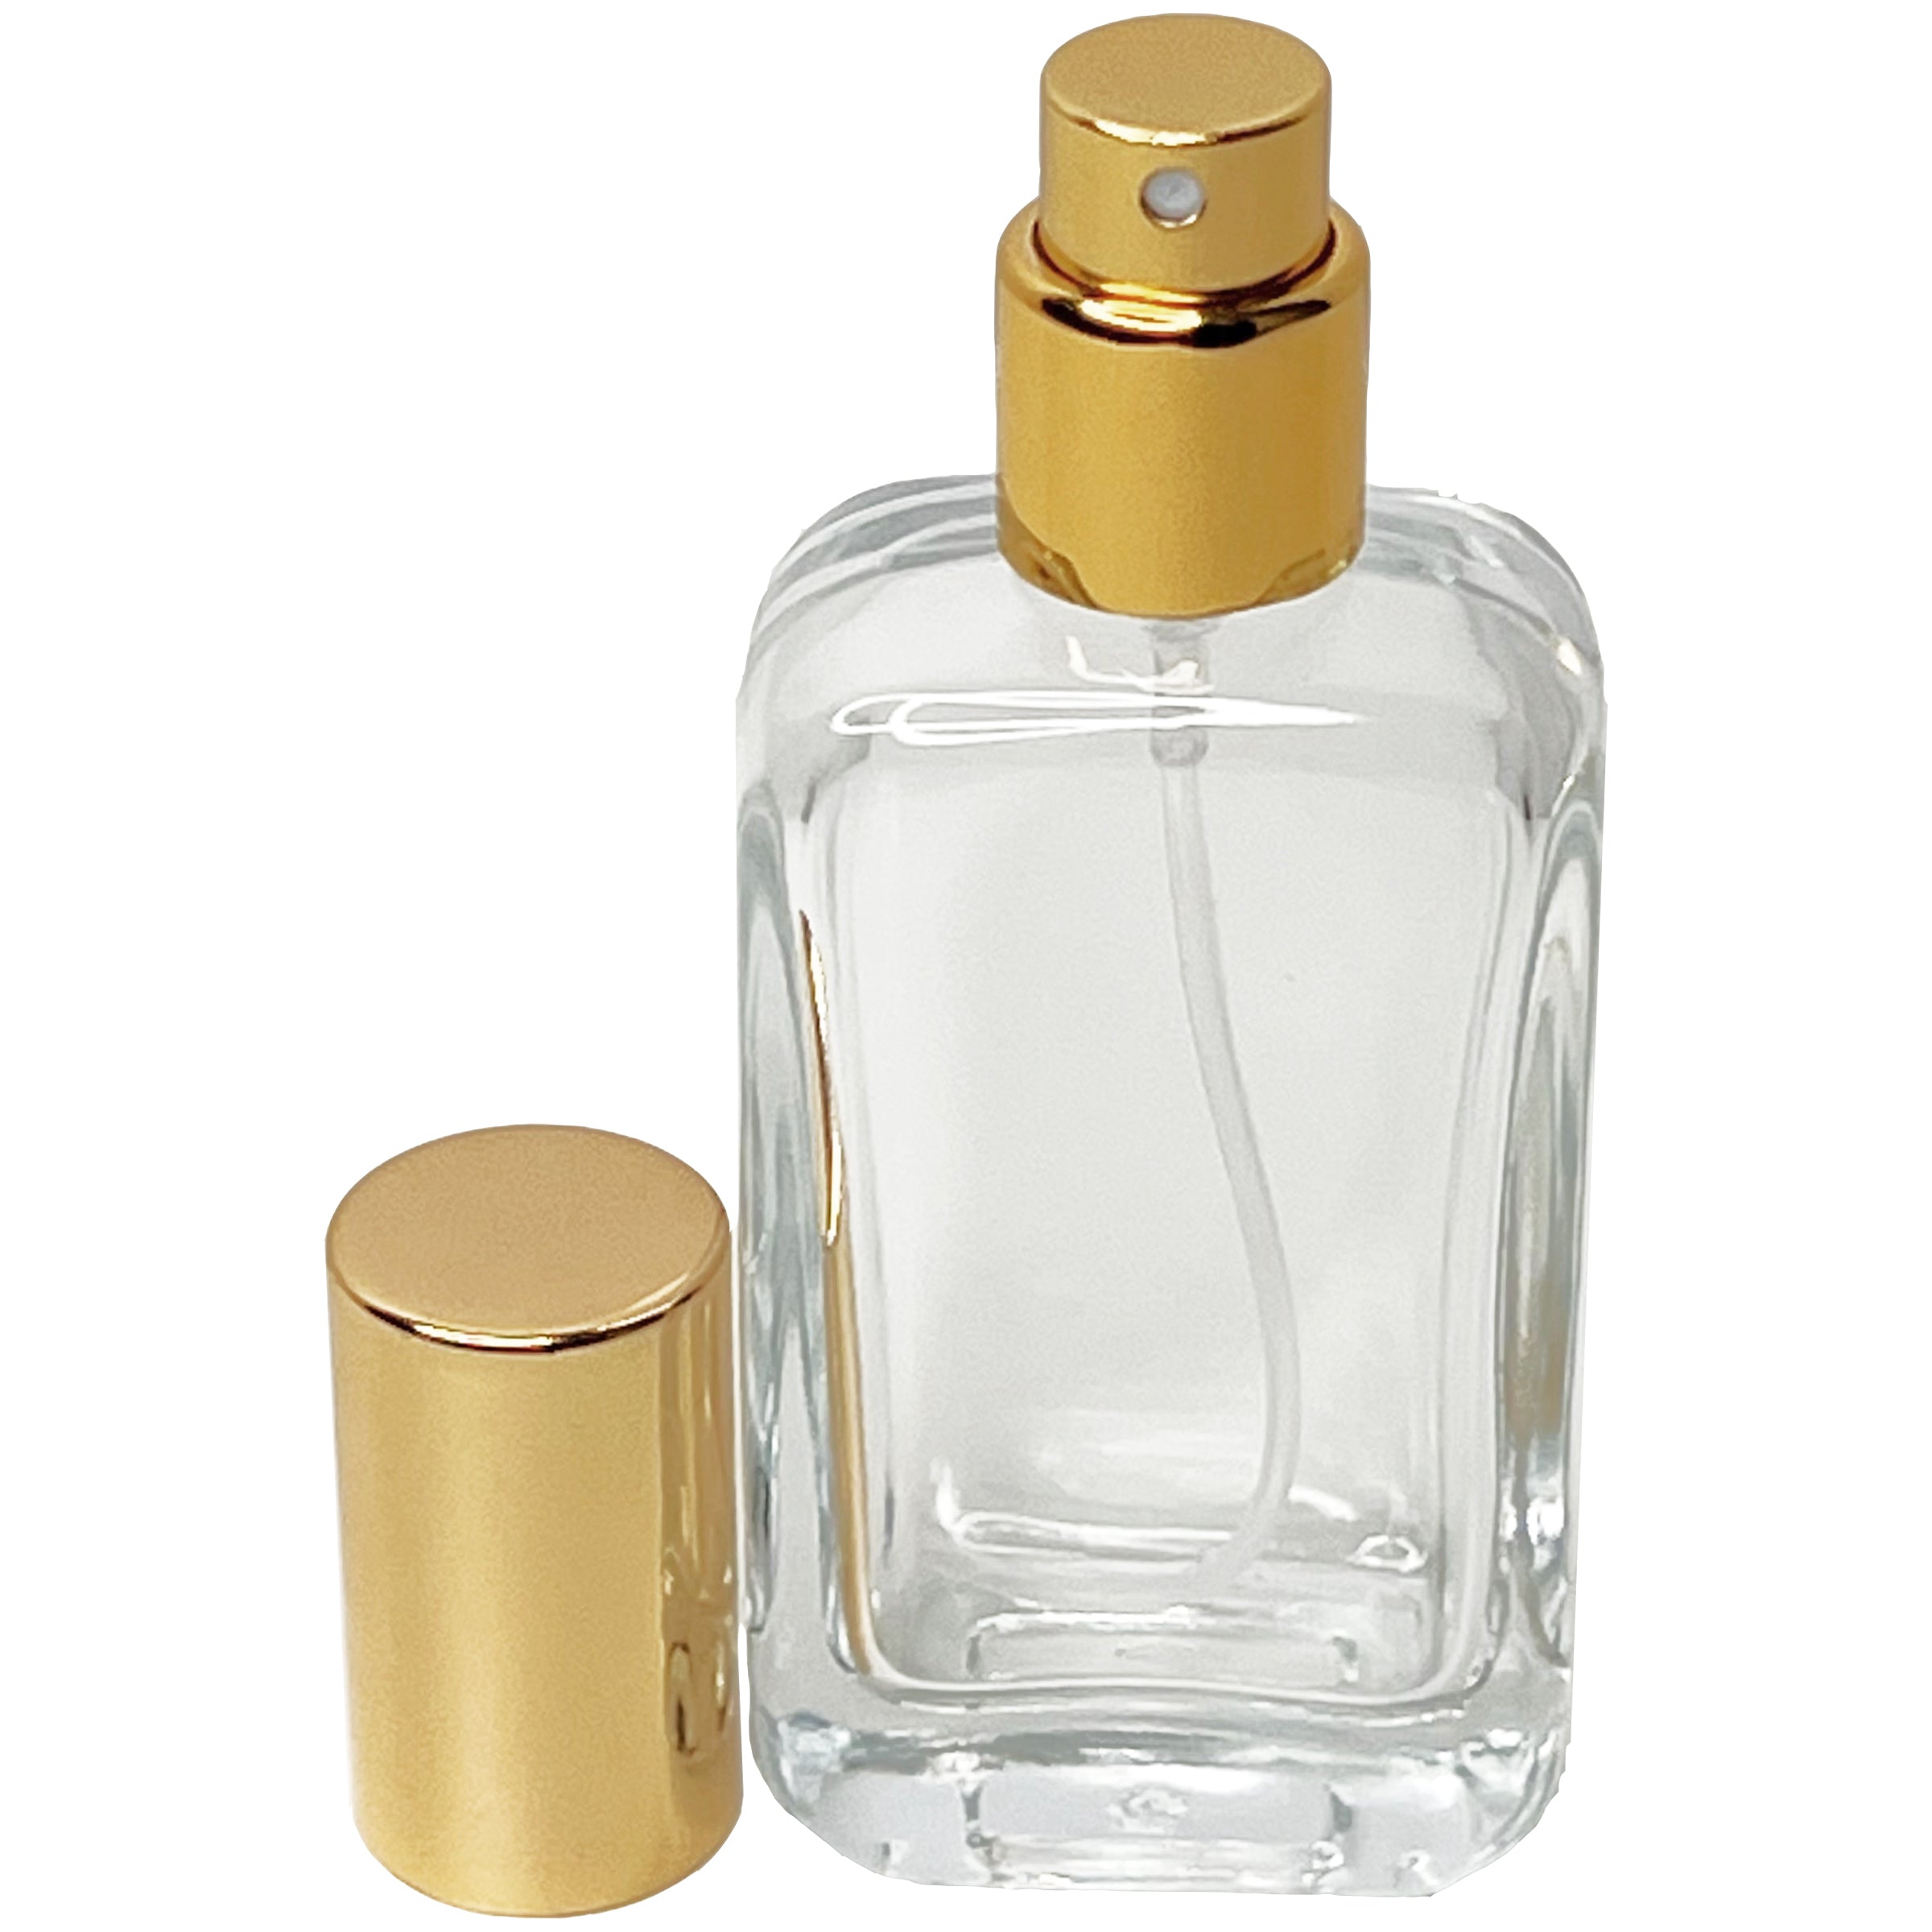 30ml 1oz Perfume Rounded Glass Spray Bottles Gold cap